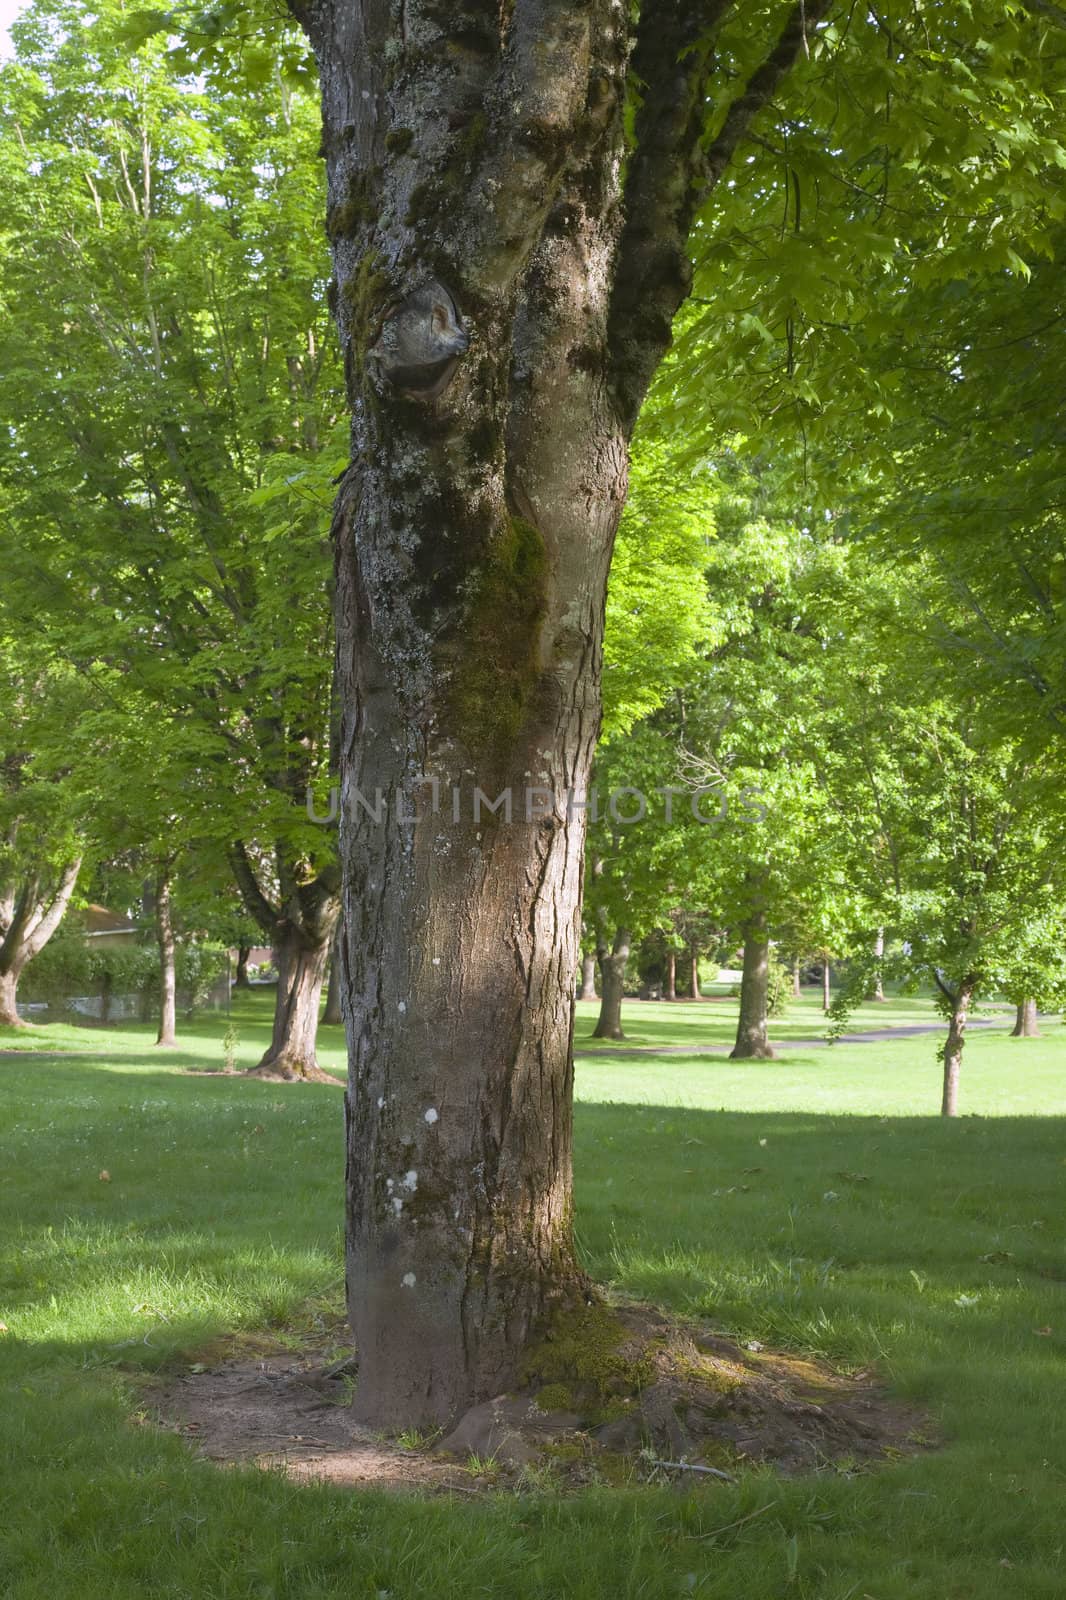 Tree trunk in a public park, Portland OR.